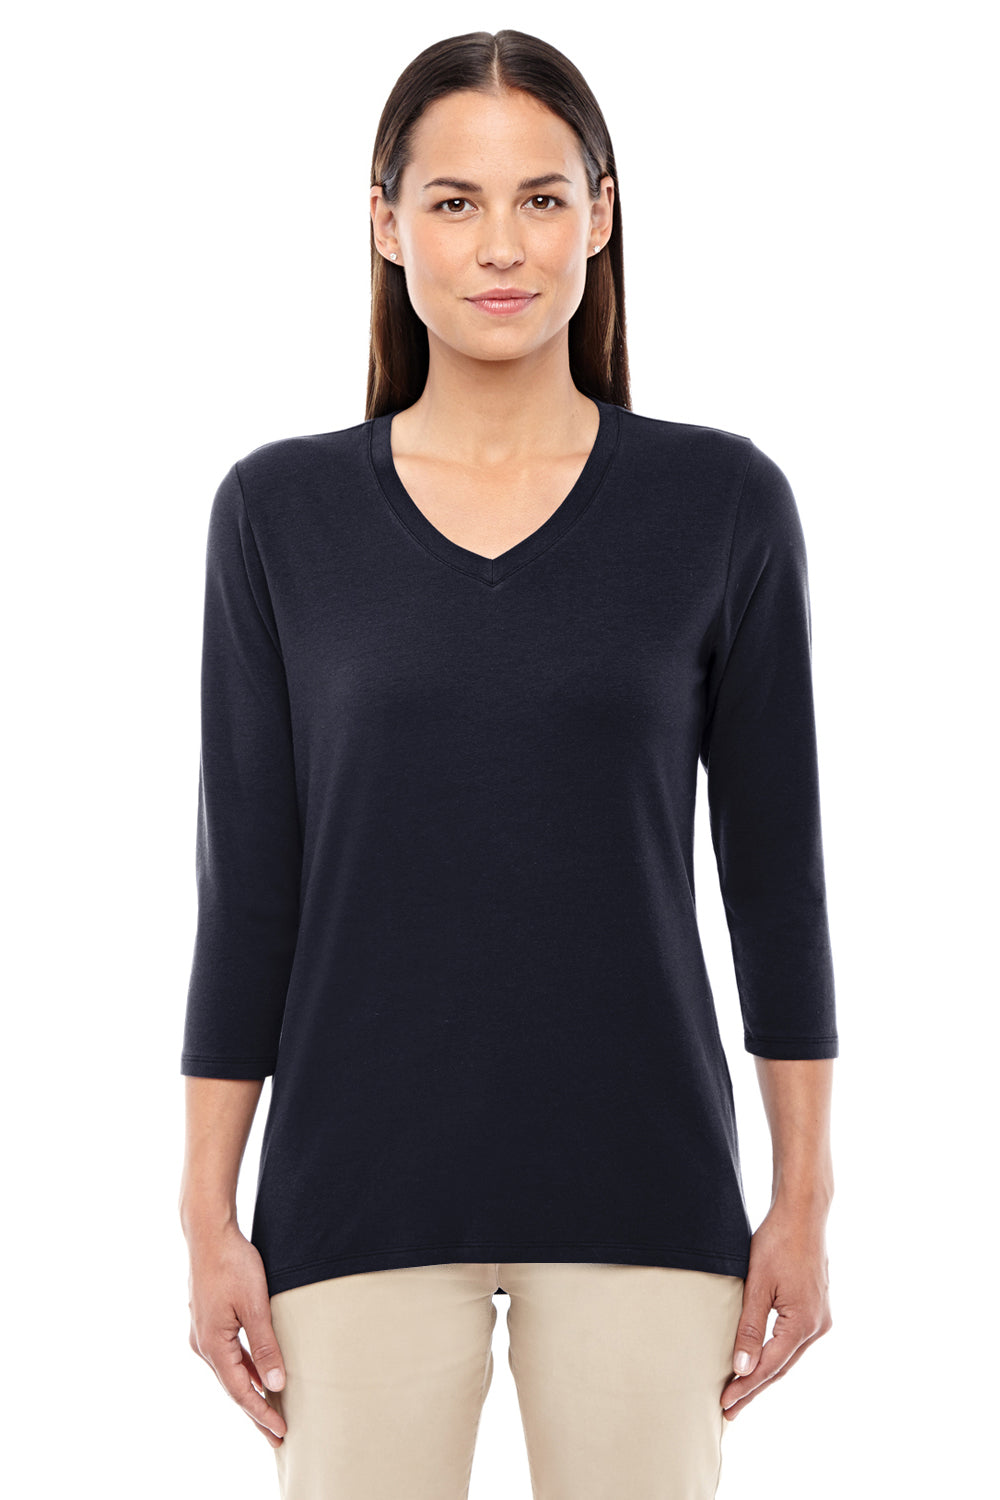 Devon & Jones DP184W Womens Perfect Fit 3/4 Sleeve V-Neck T-Shirt Black Front